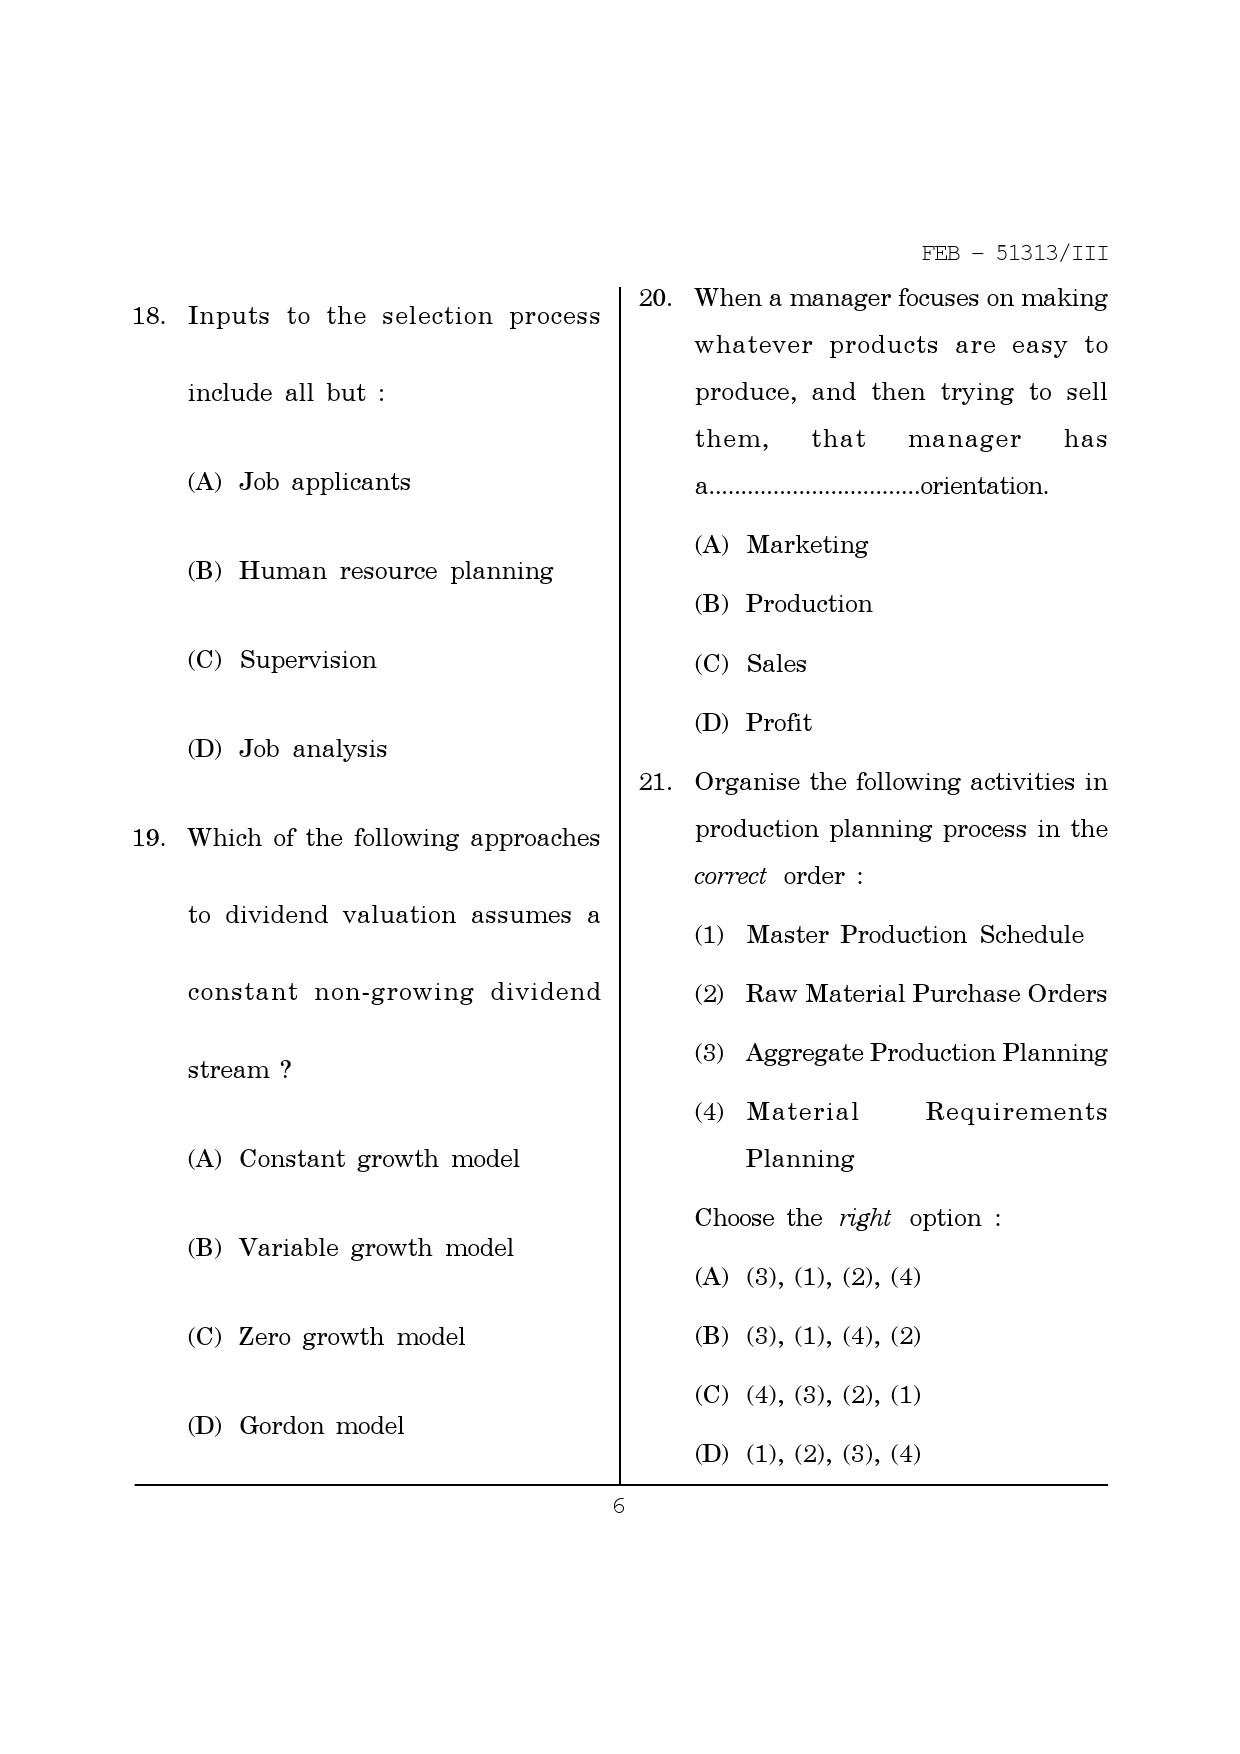 Maharashtra SET Management Question Paper III February 2013 6